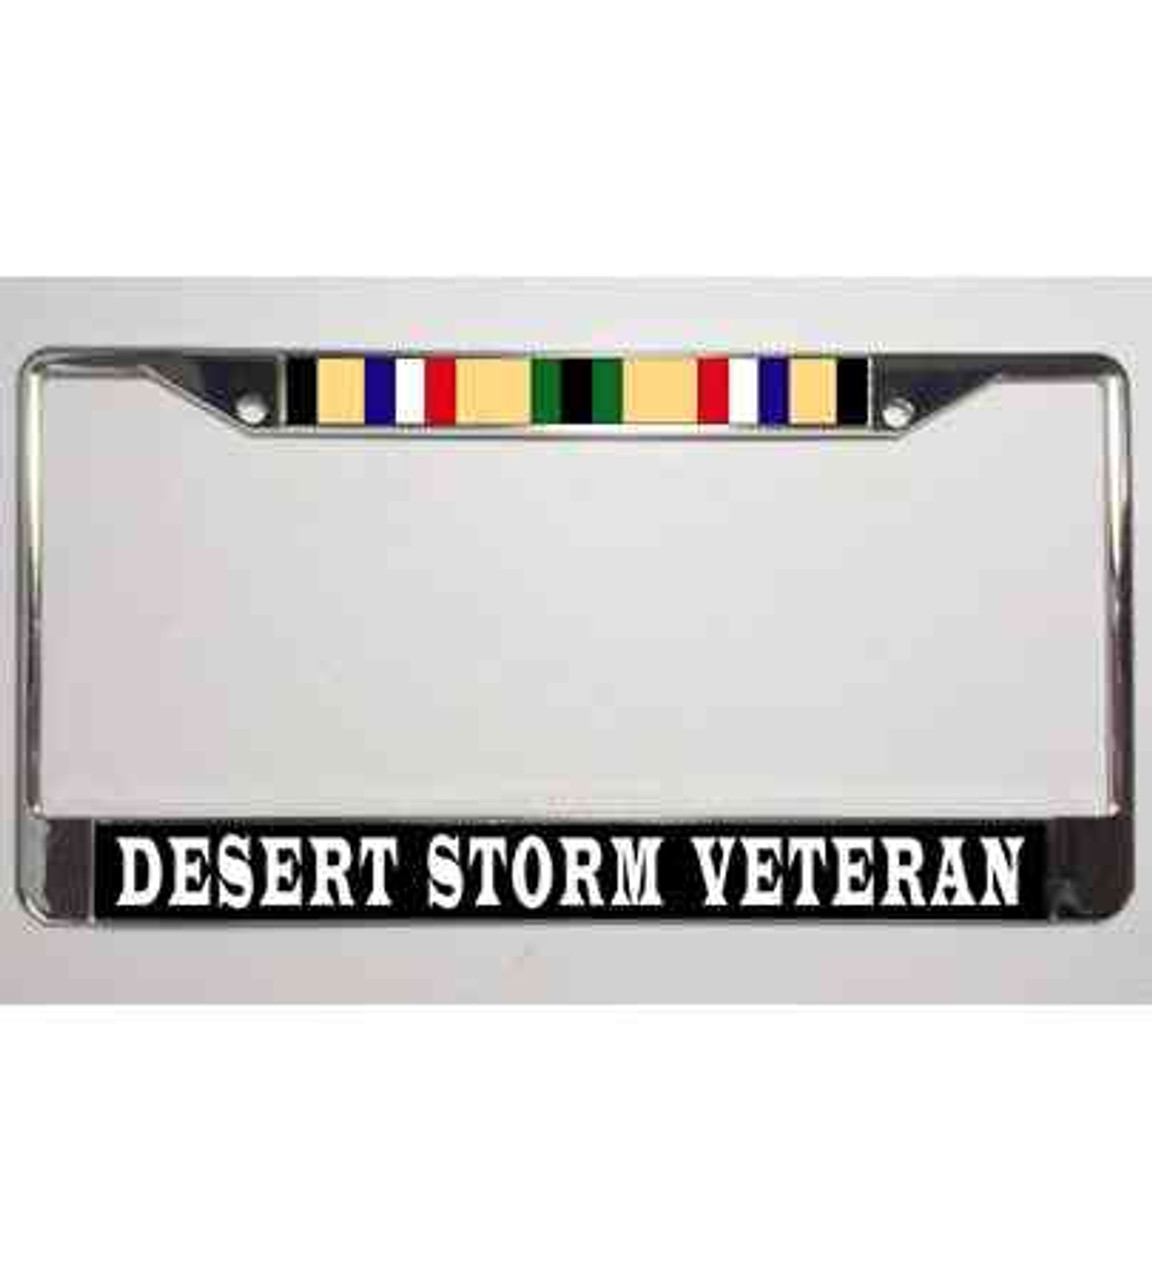 desert storm veteran campaign ribbon license plate frame